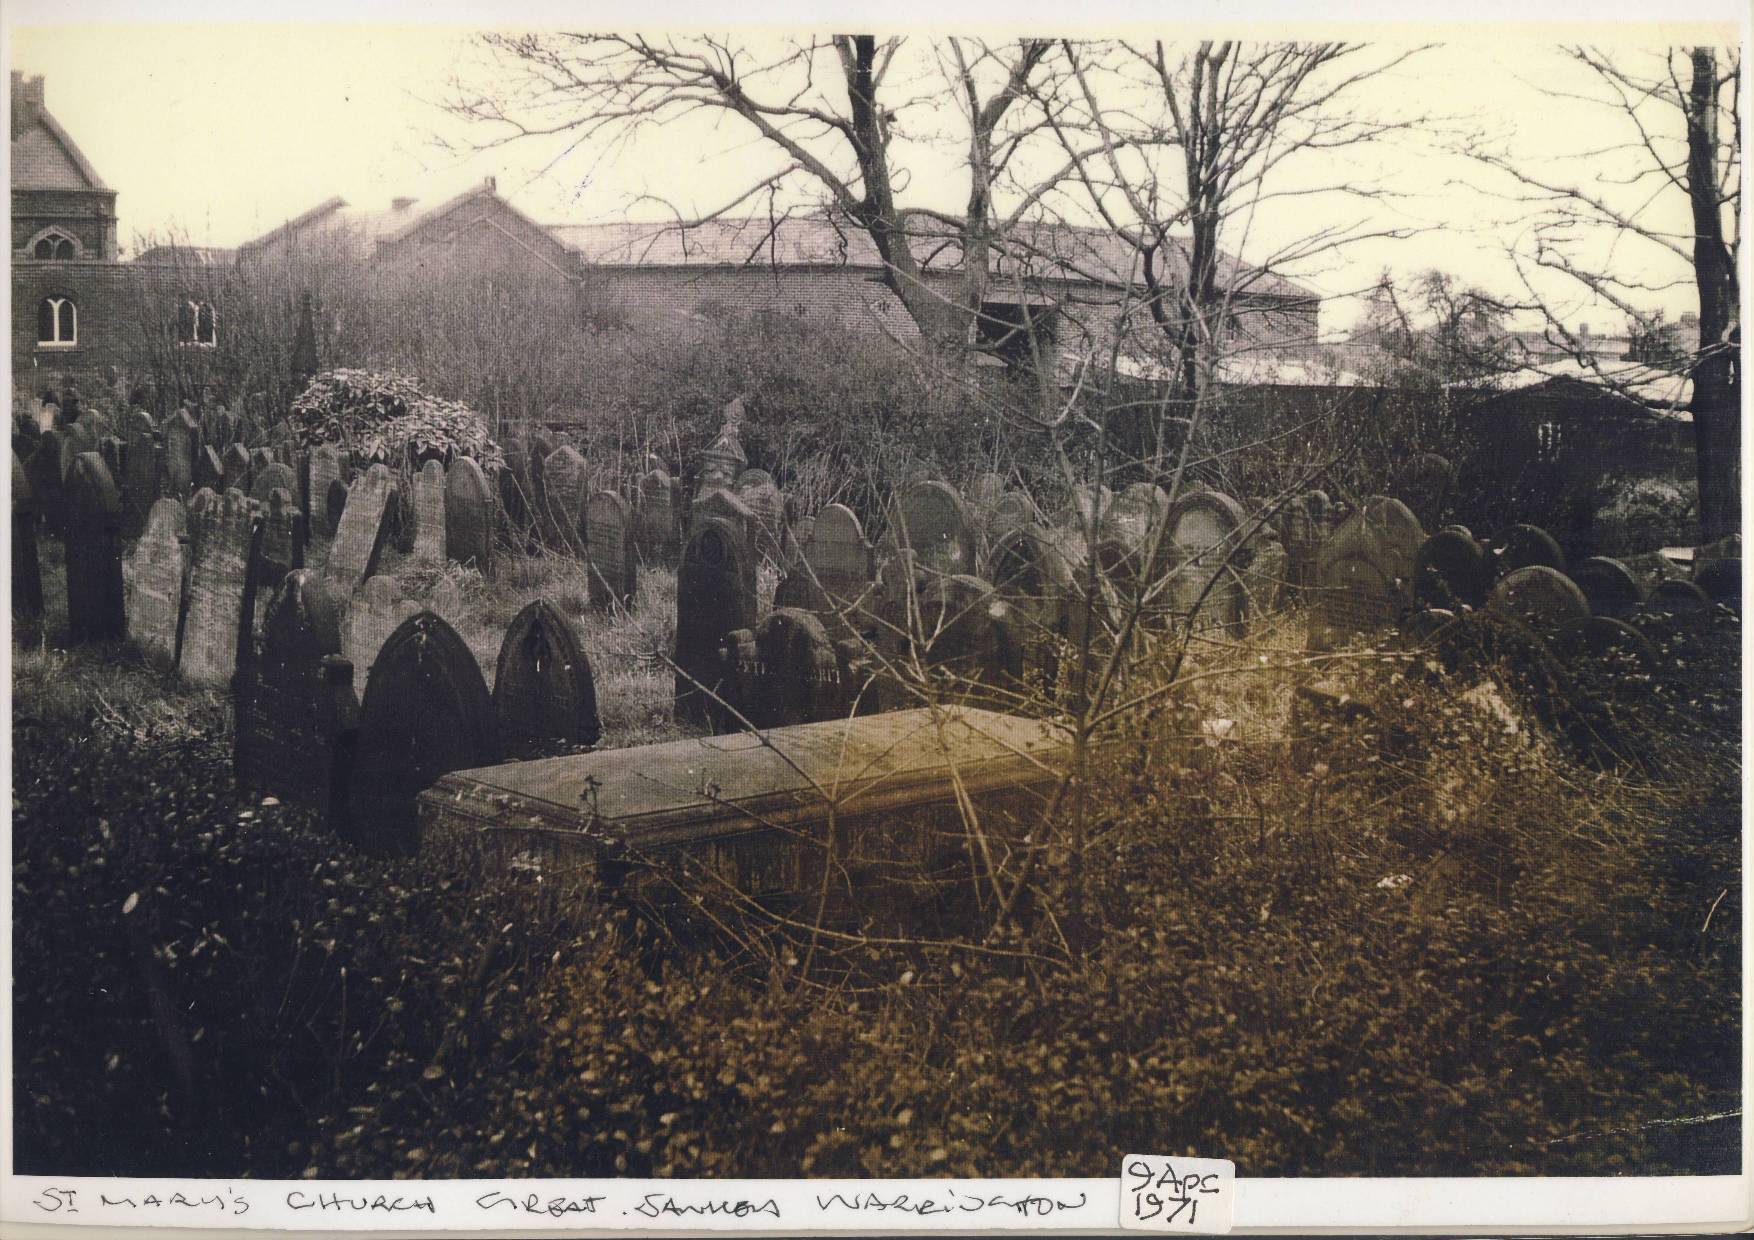 St Mary Great Sankey rear graveyard 1971 - photo 4 of 4